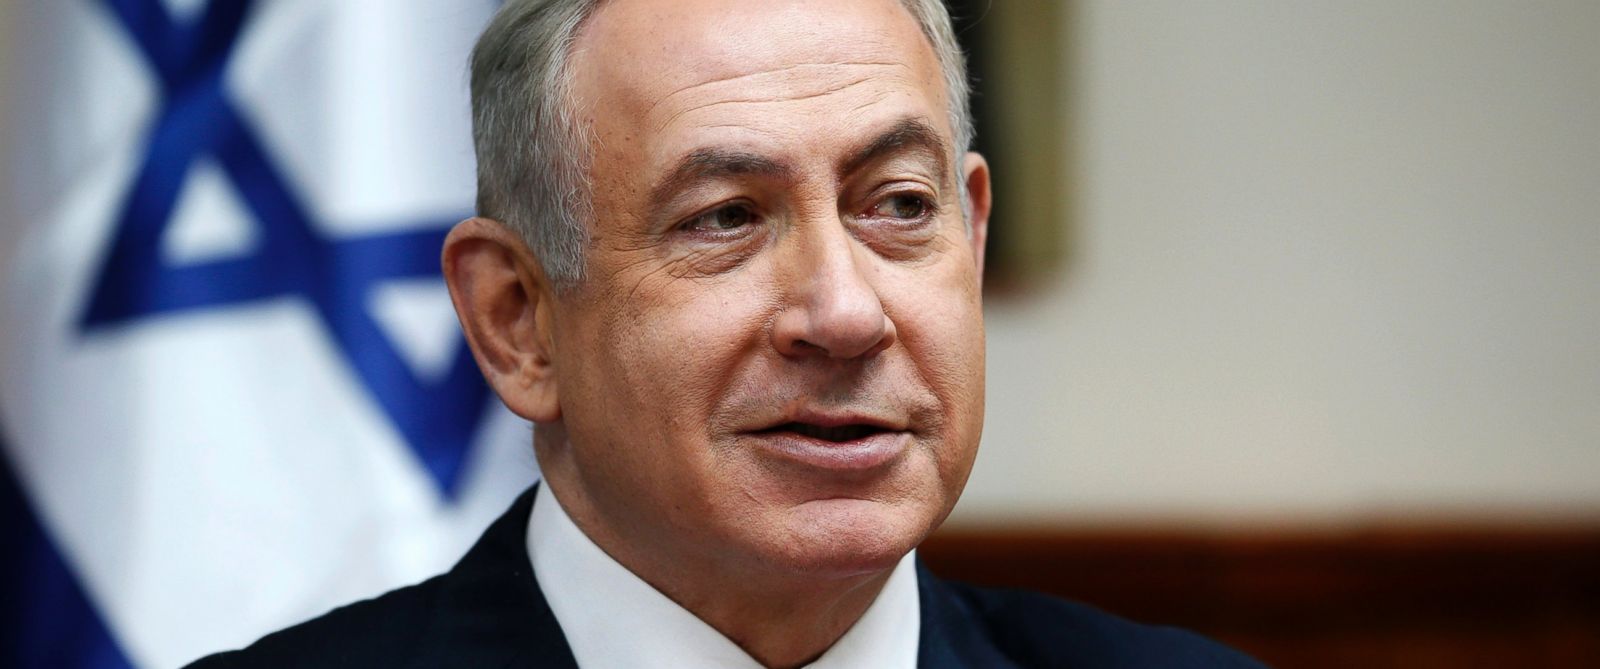 Israeli PM Benjamin Netanyahu wishes Muslims 'Ramadan Kareem' - ABC News